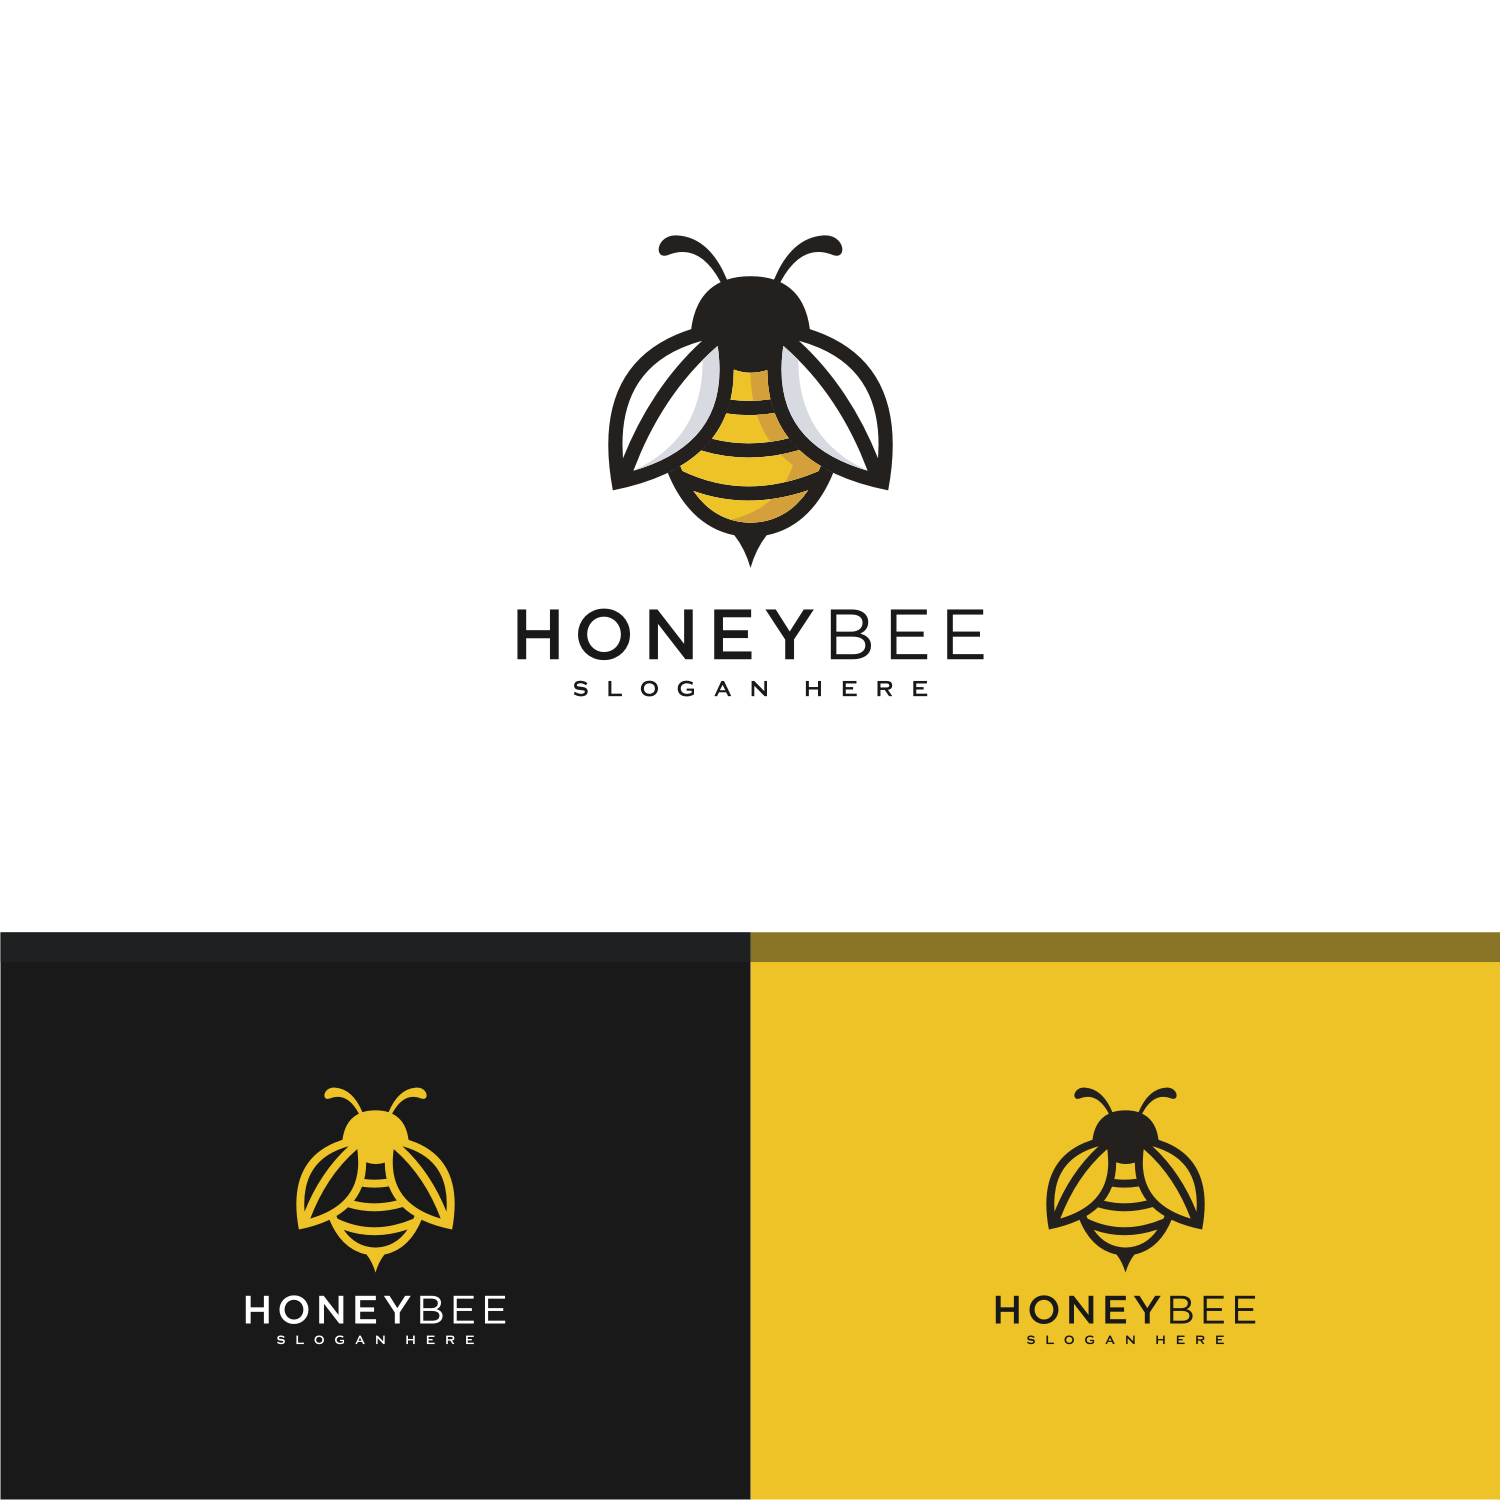 3 Honey Bee Animals Logo Vector Cover Image.